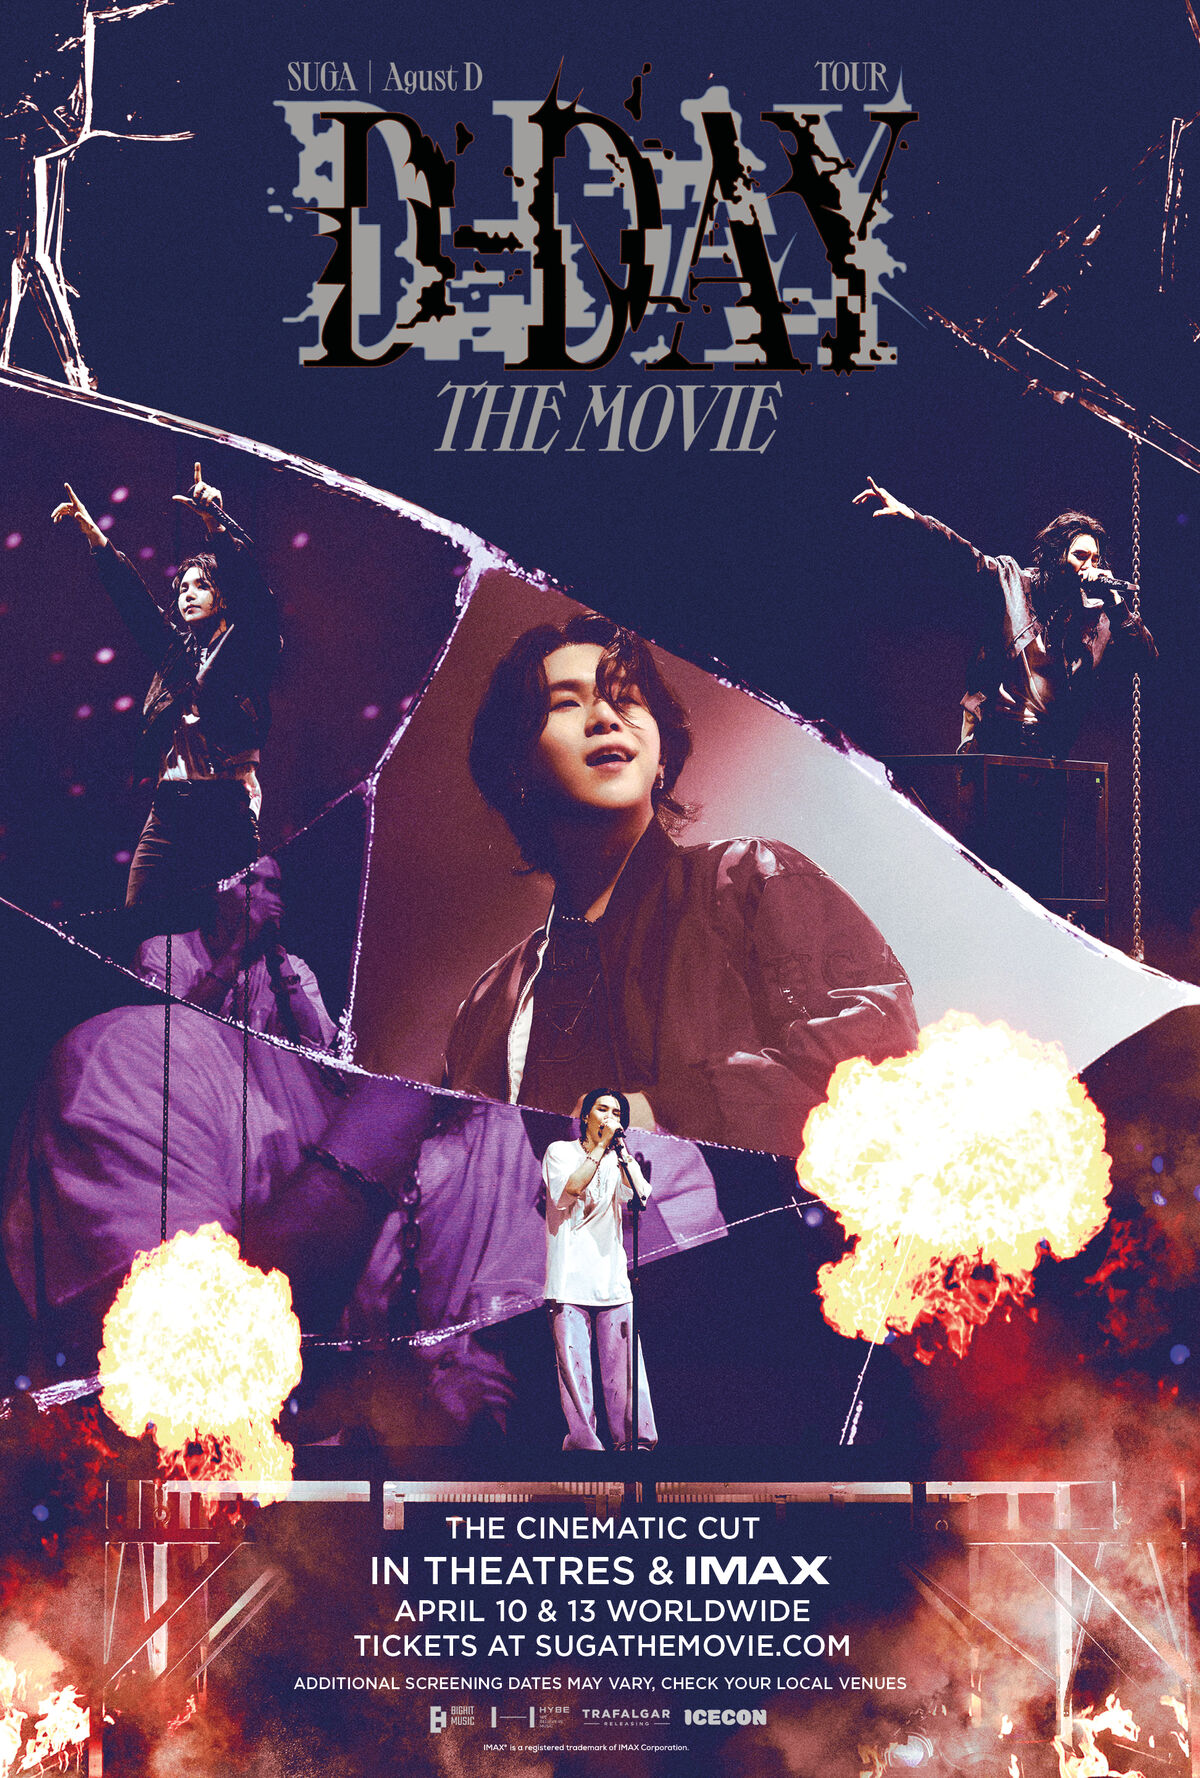 SUGA│Agust D TOUR 'D-DAY' THE MOVIE | BTS Wiki | Fandom